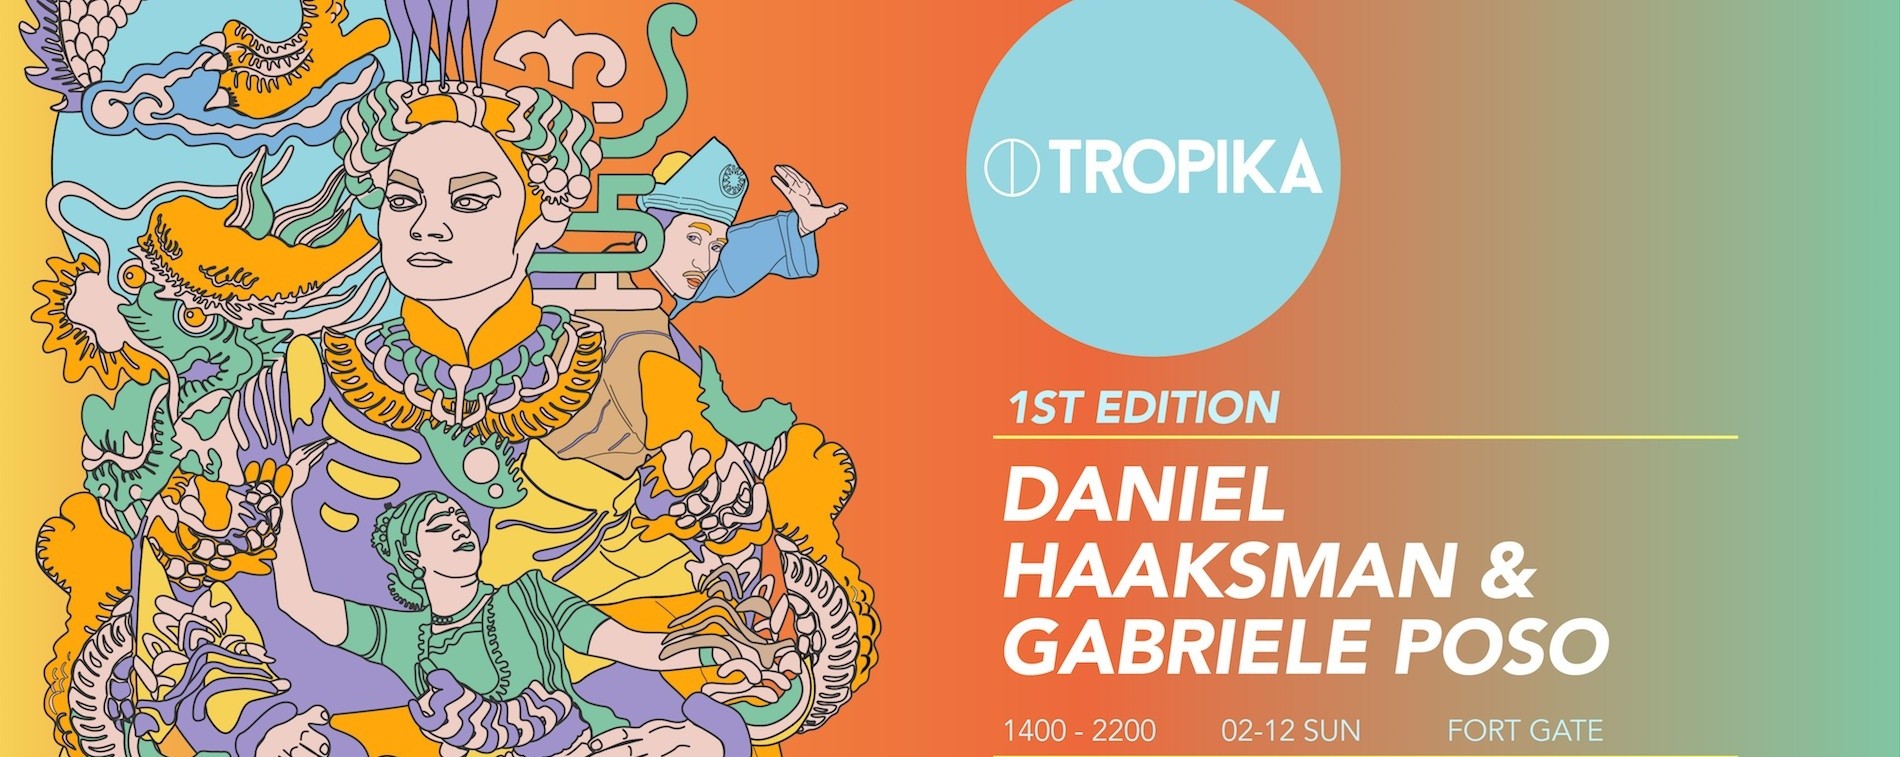 Tropika 1st Edition